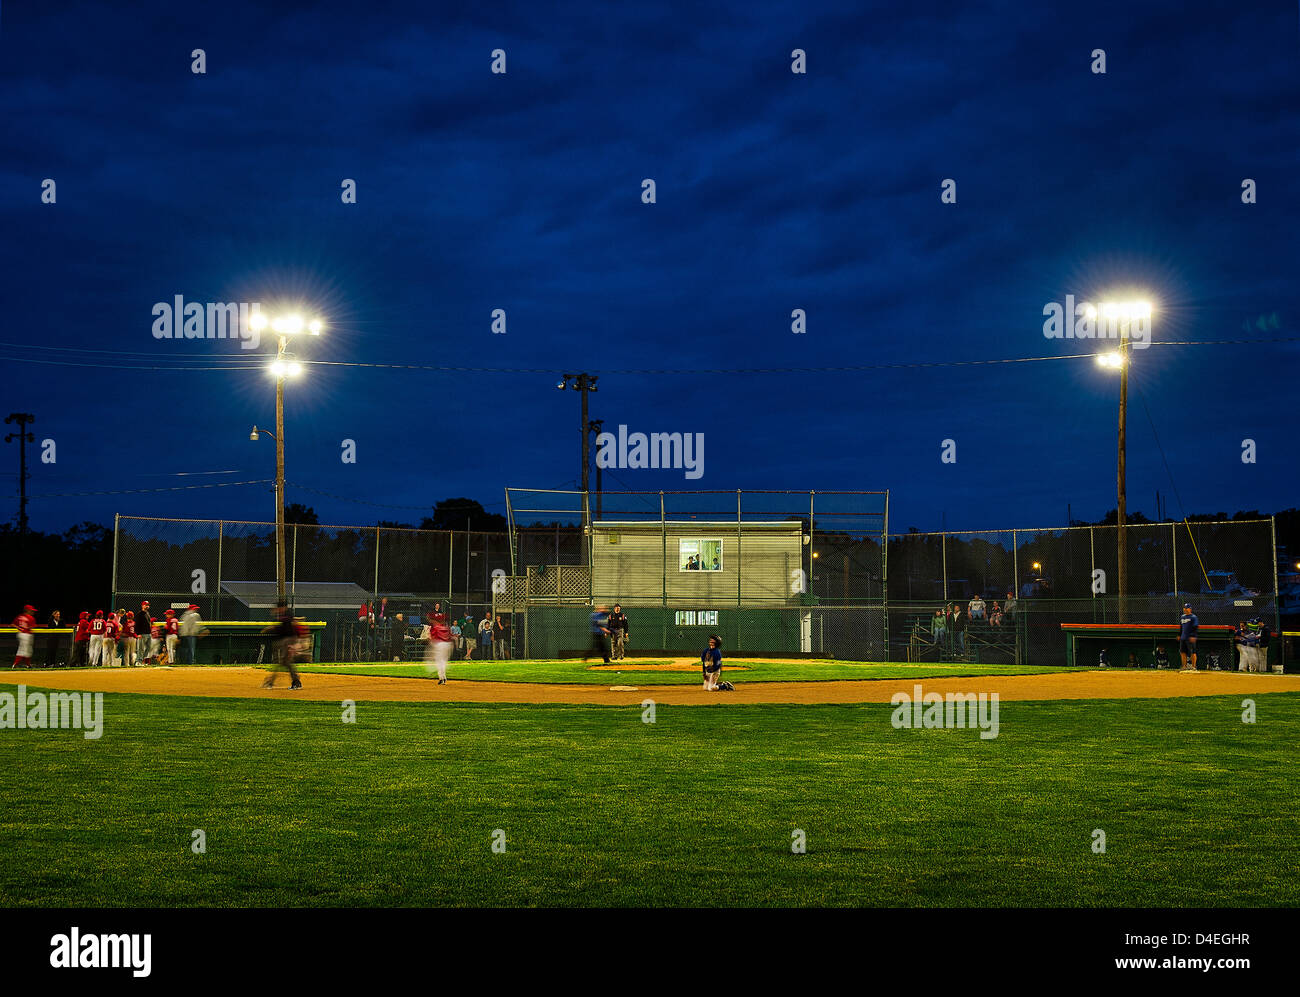 Little League baseball game at night. Stock Photo